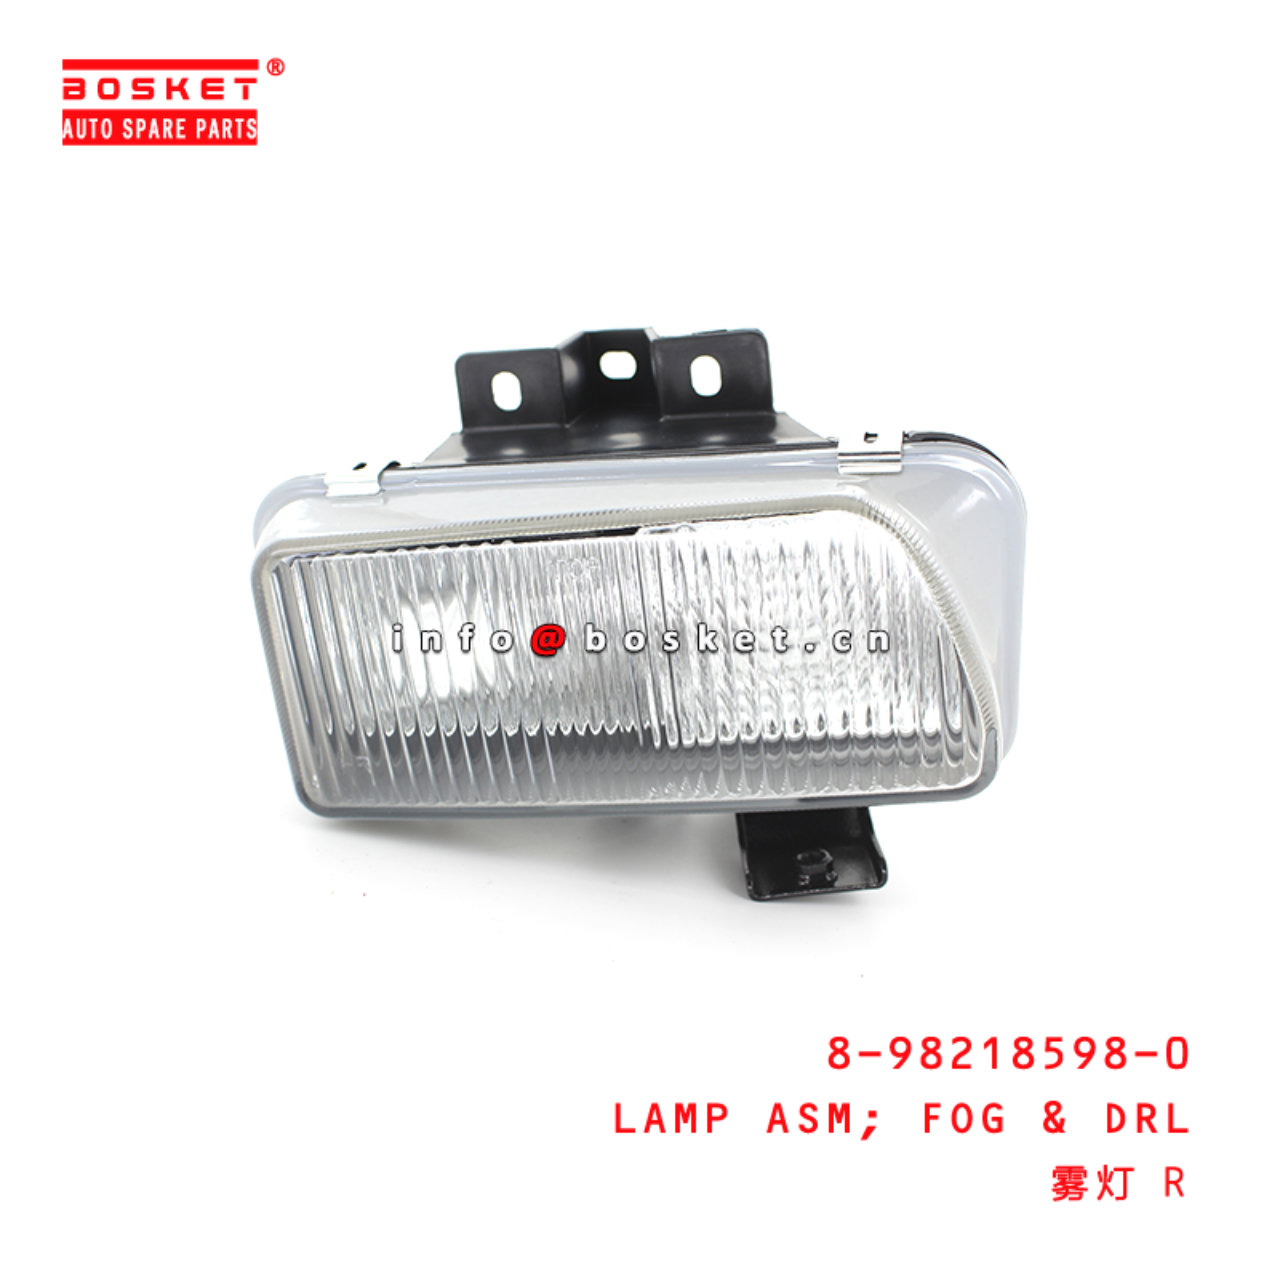 8-98218598-0 Fog & Drl Lamp Assembly Suitable for ISUZU FRR 8982185980